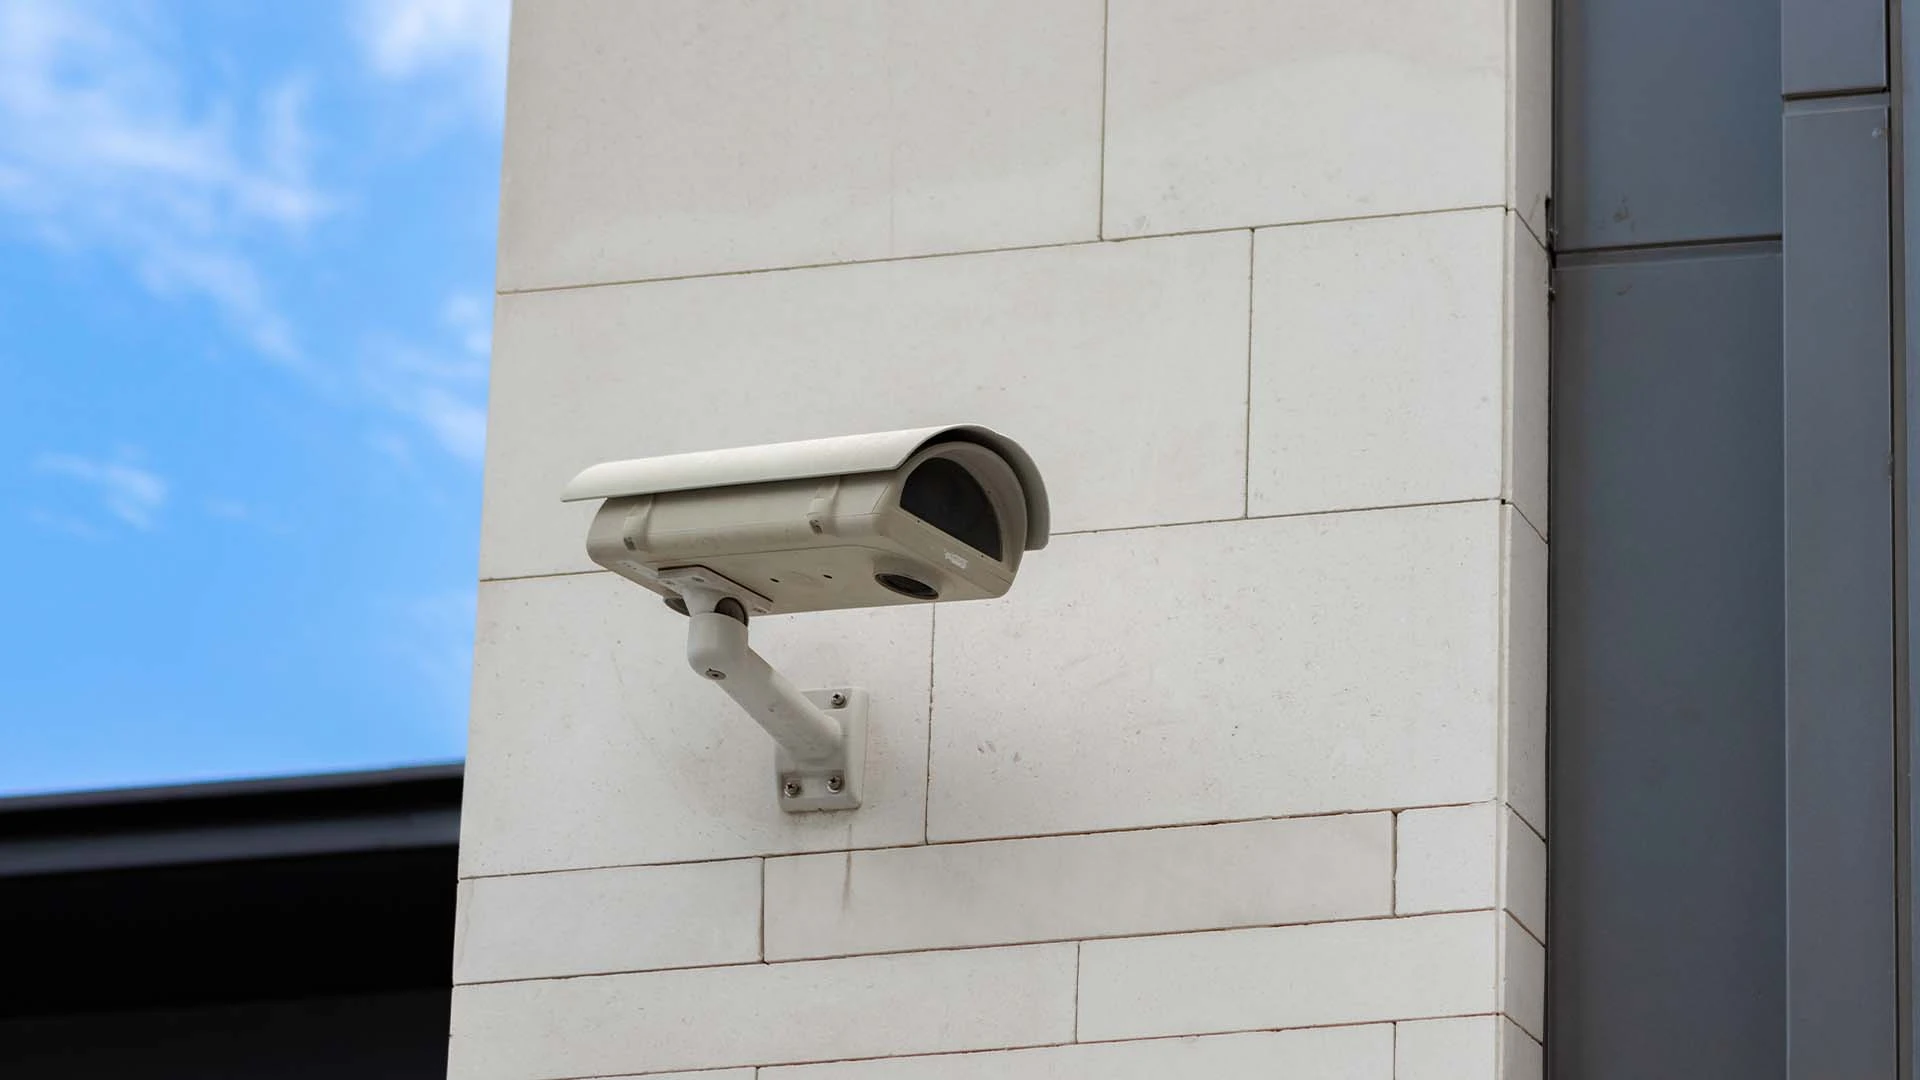 surveillance-camera-built-into-stone-wall-building